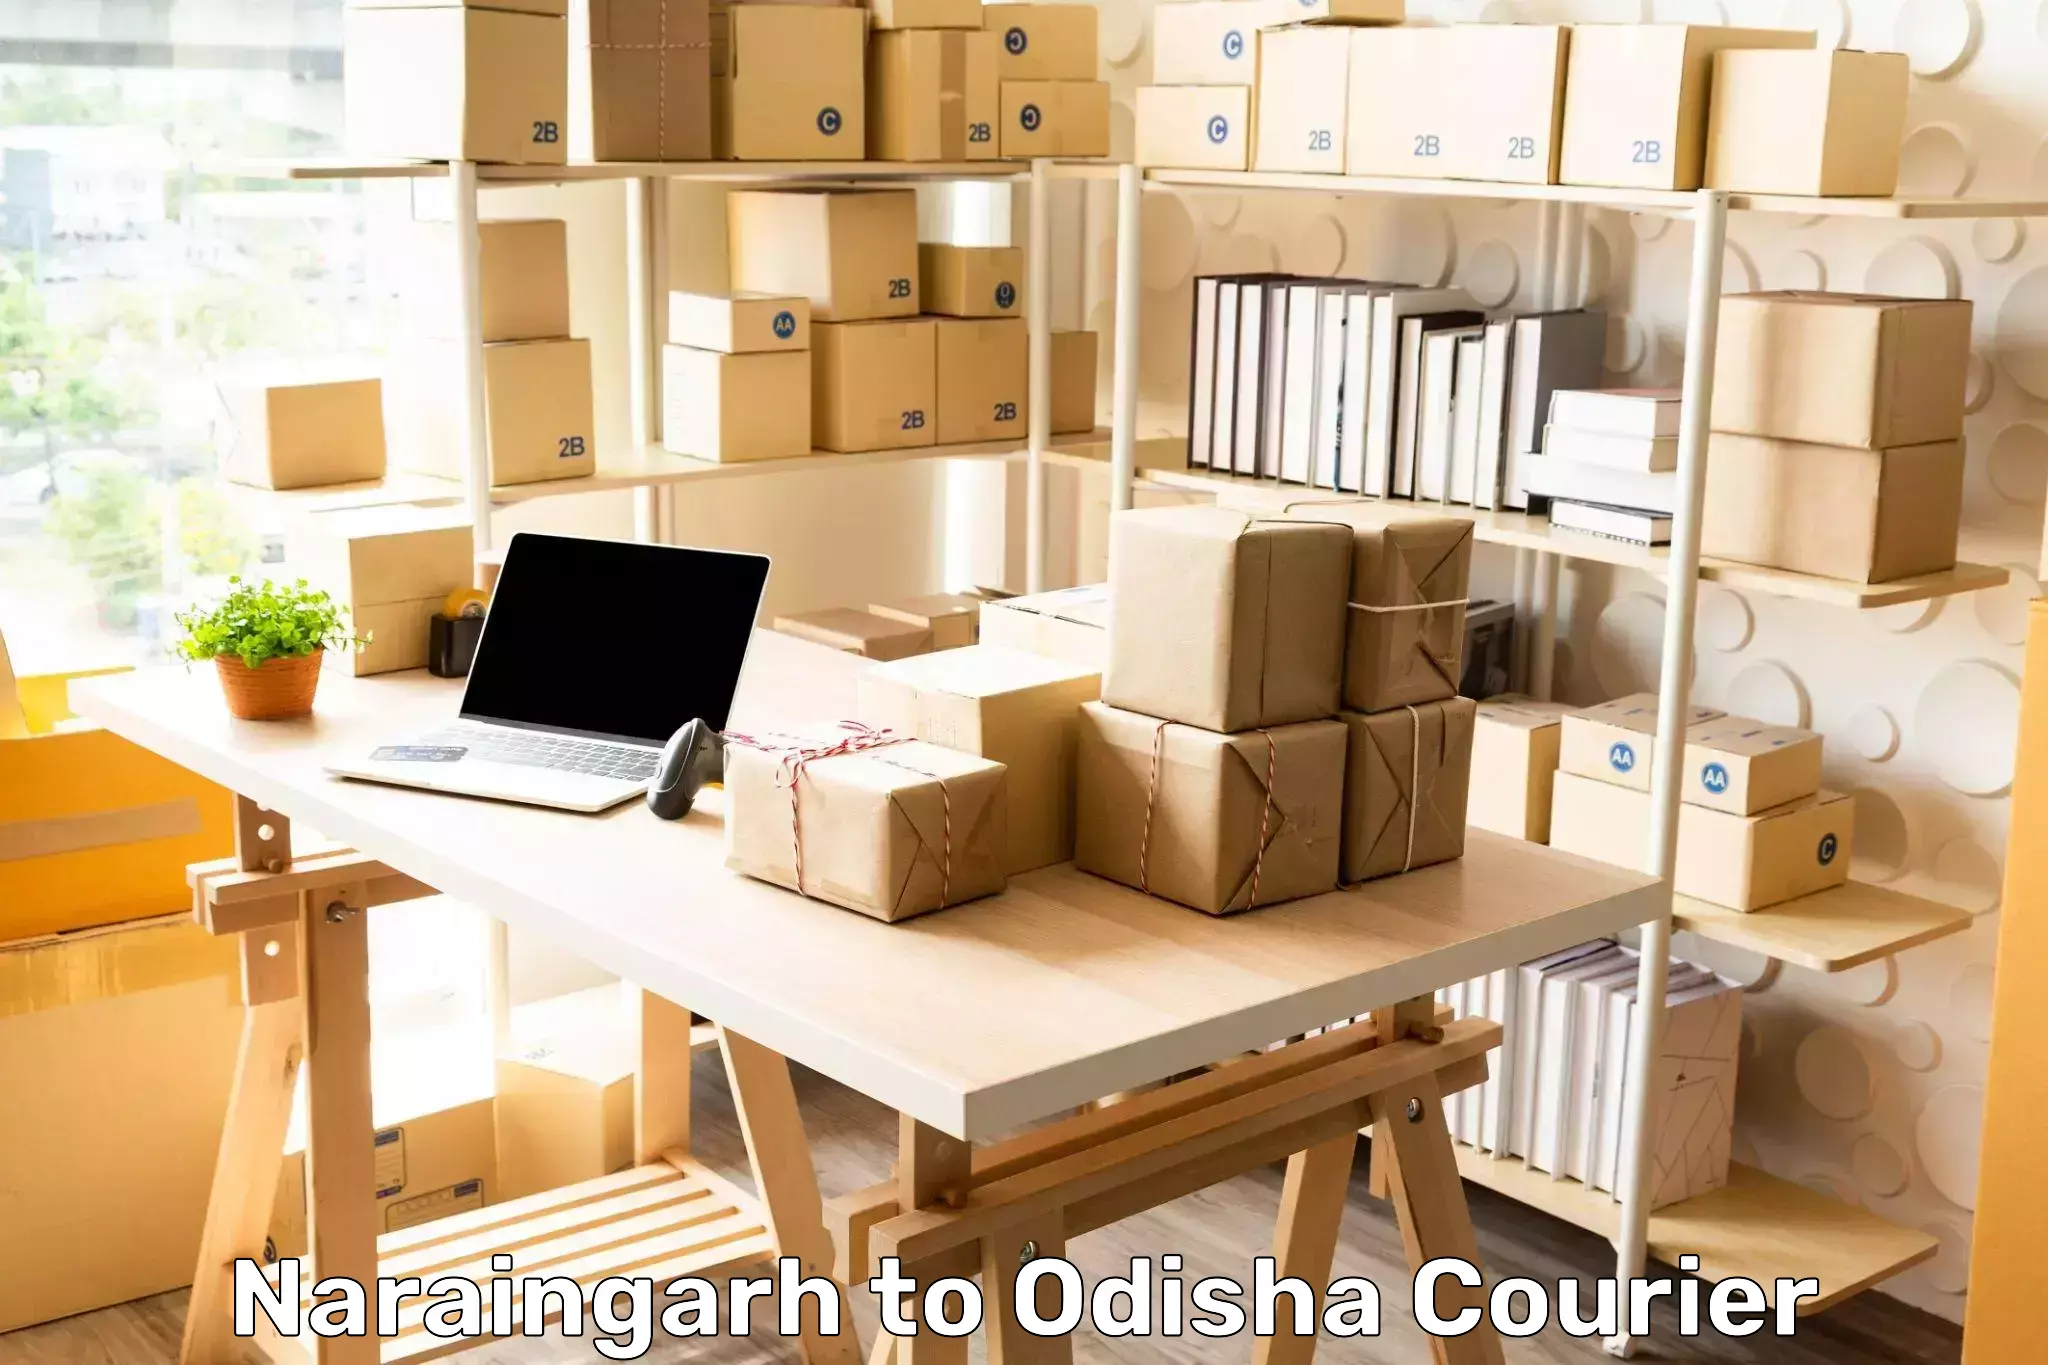 Global logistics network Naraingarh to Sankerko